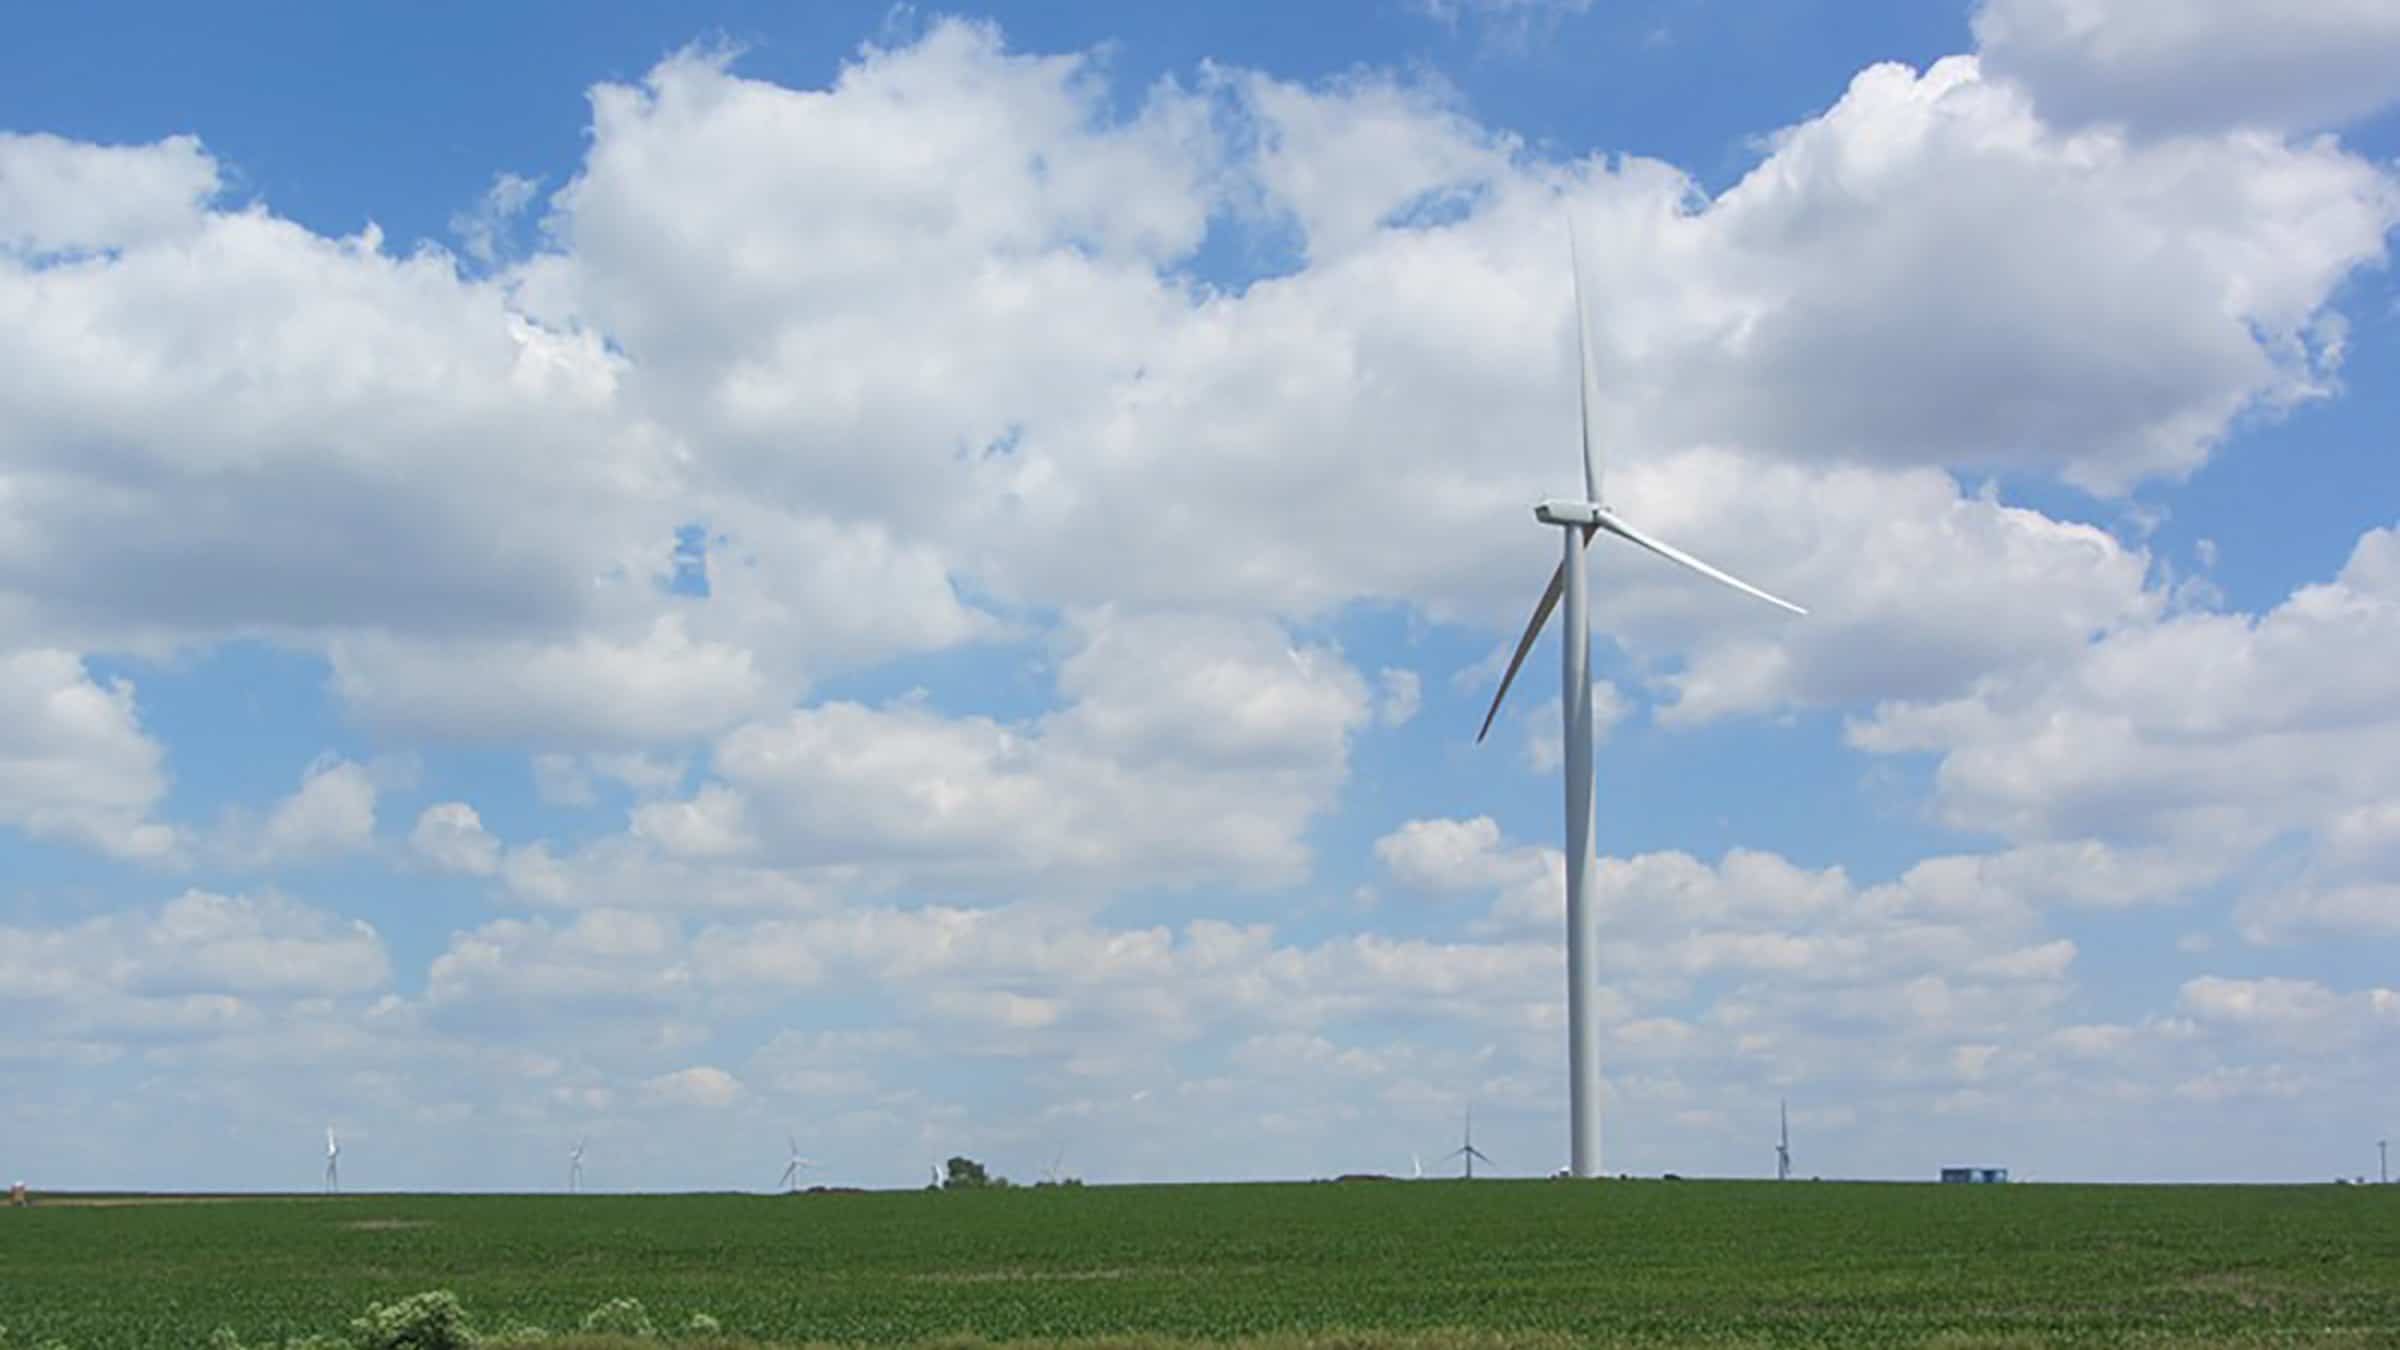 MidAmerican Energy - Bishop Hill II Wind Farm Wind Turbine Construction Project